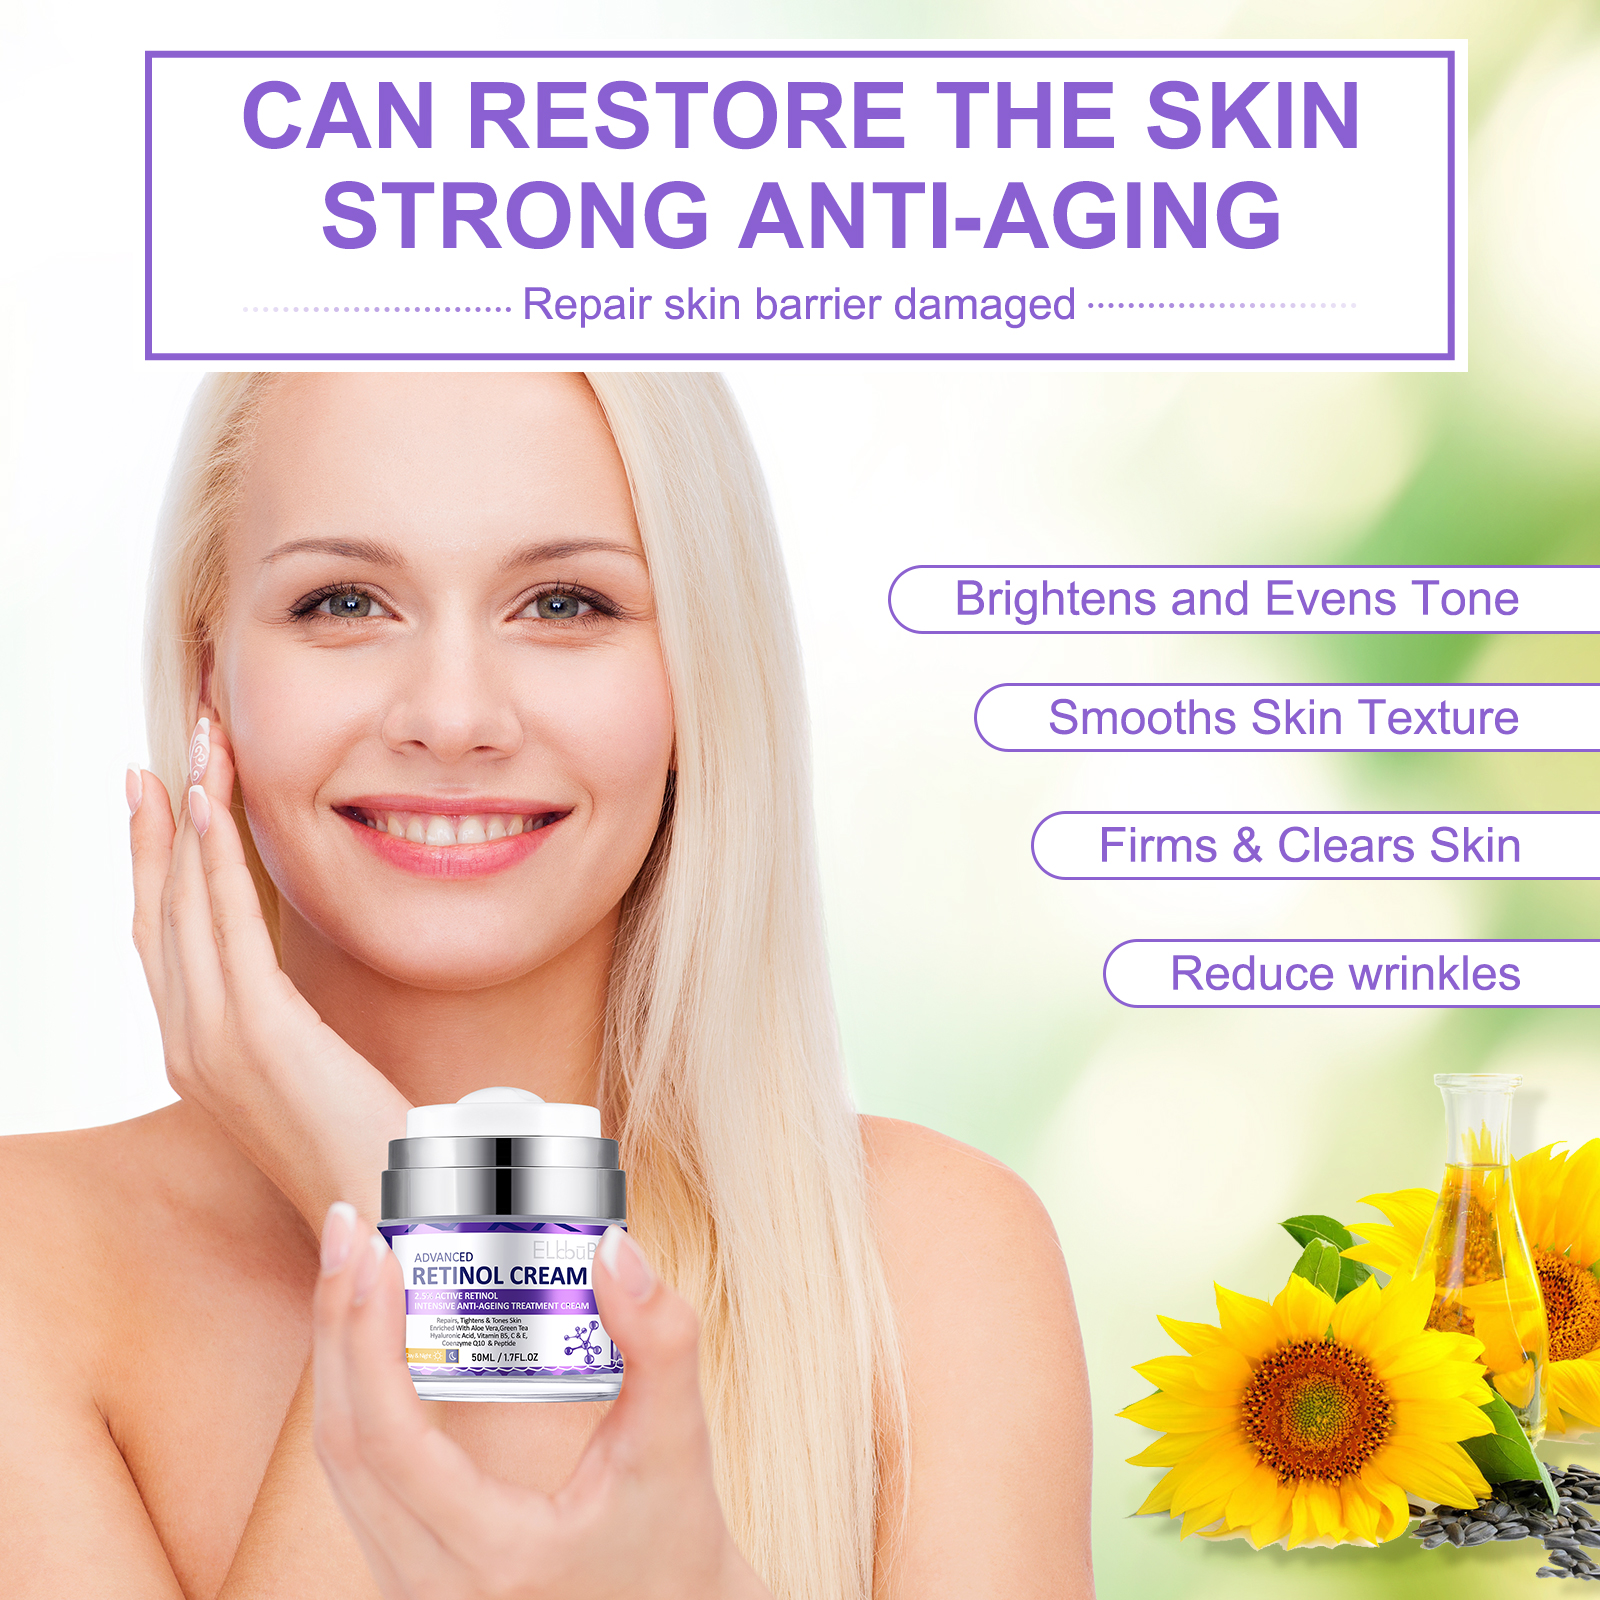 Elbbub 2.5% Retinol Face Cream Anti Aging Treatment Moisturizing Wrinkle Remover Intensive Skin Care Fine Line Repair Day Night Care Lifting